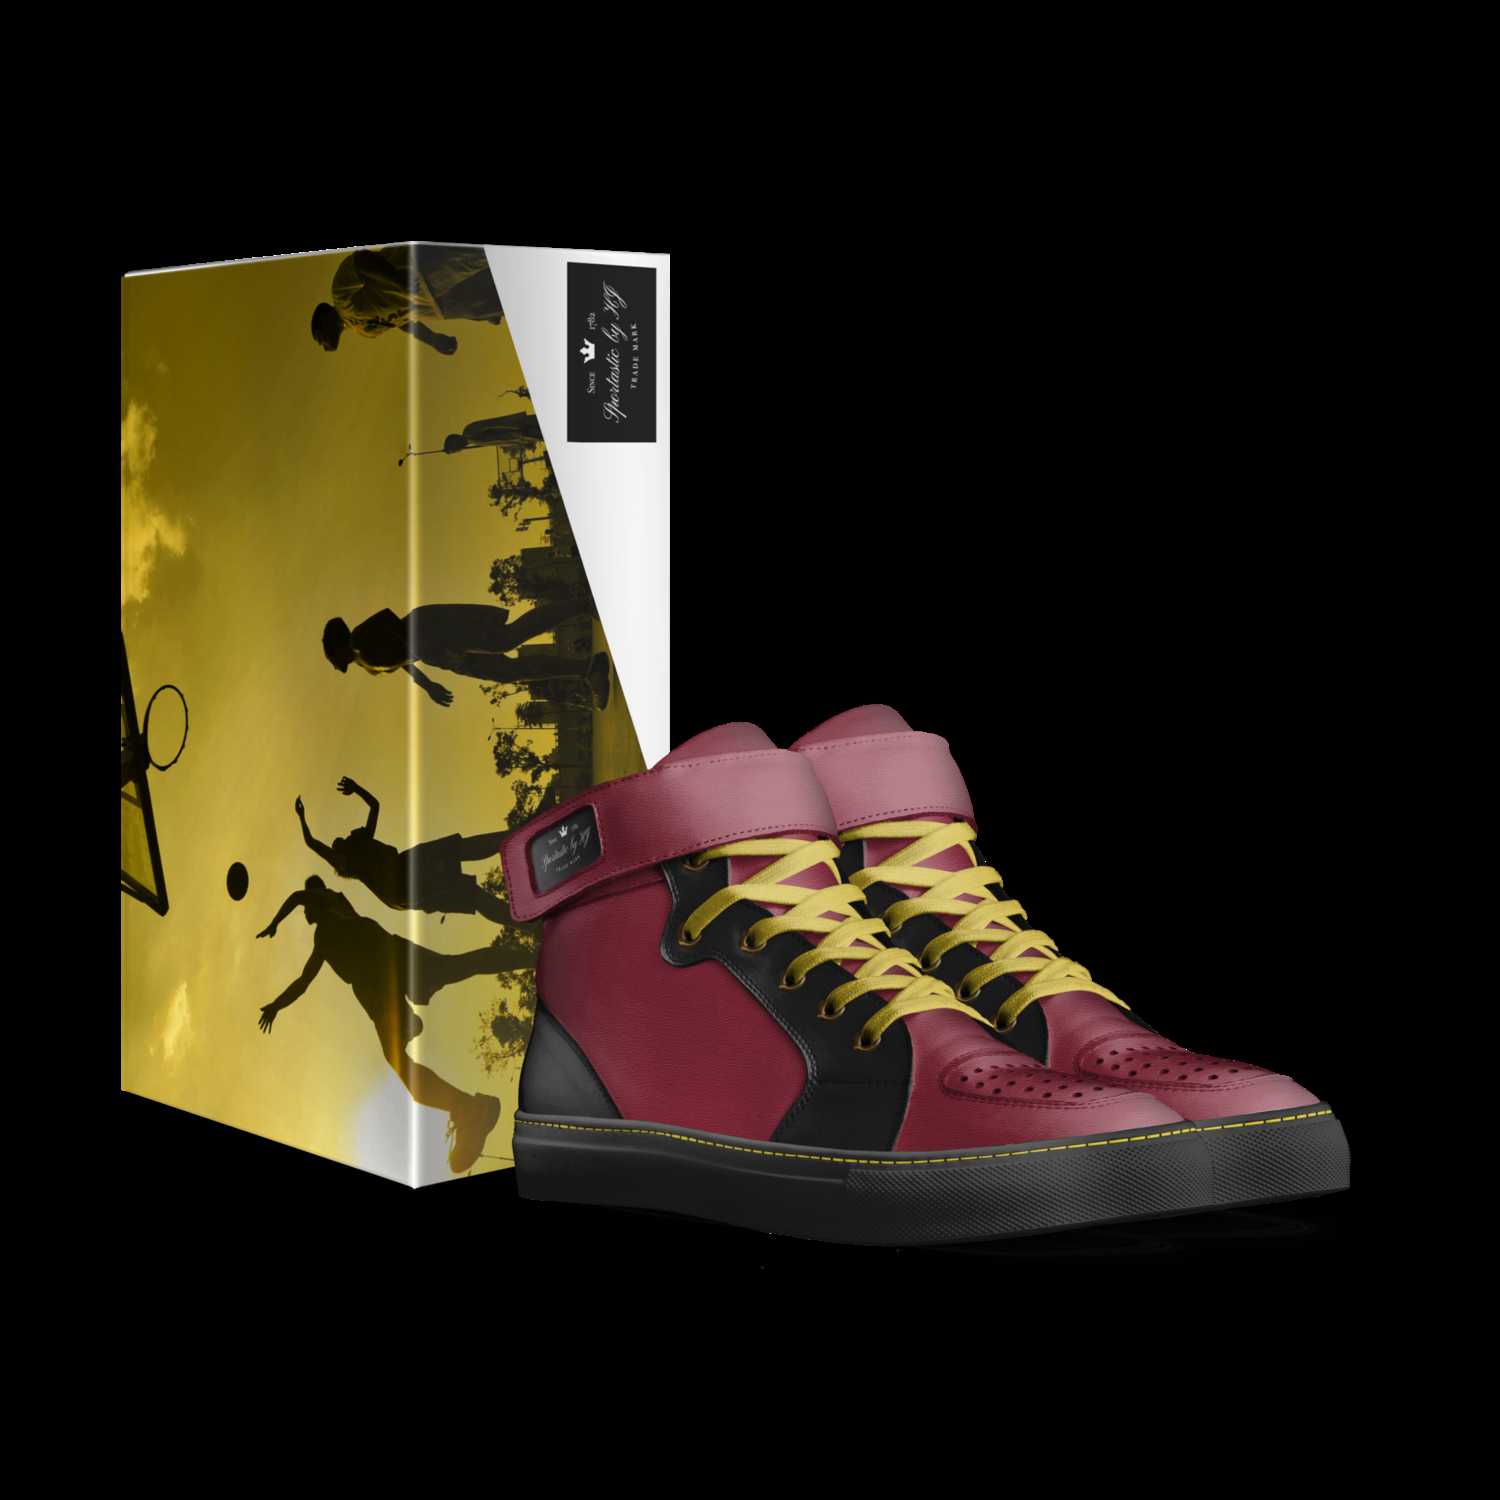 A Custom Shoe concept by Harley Jones